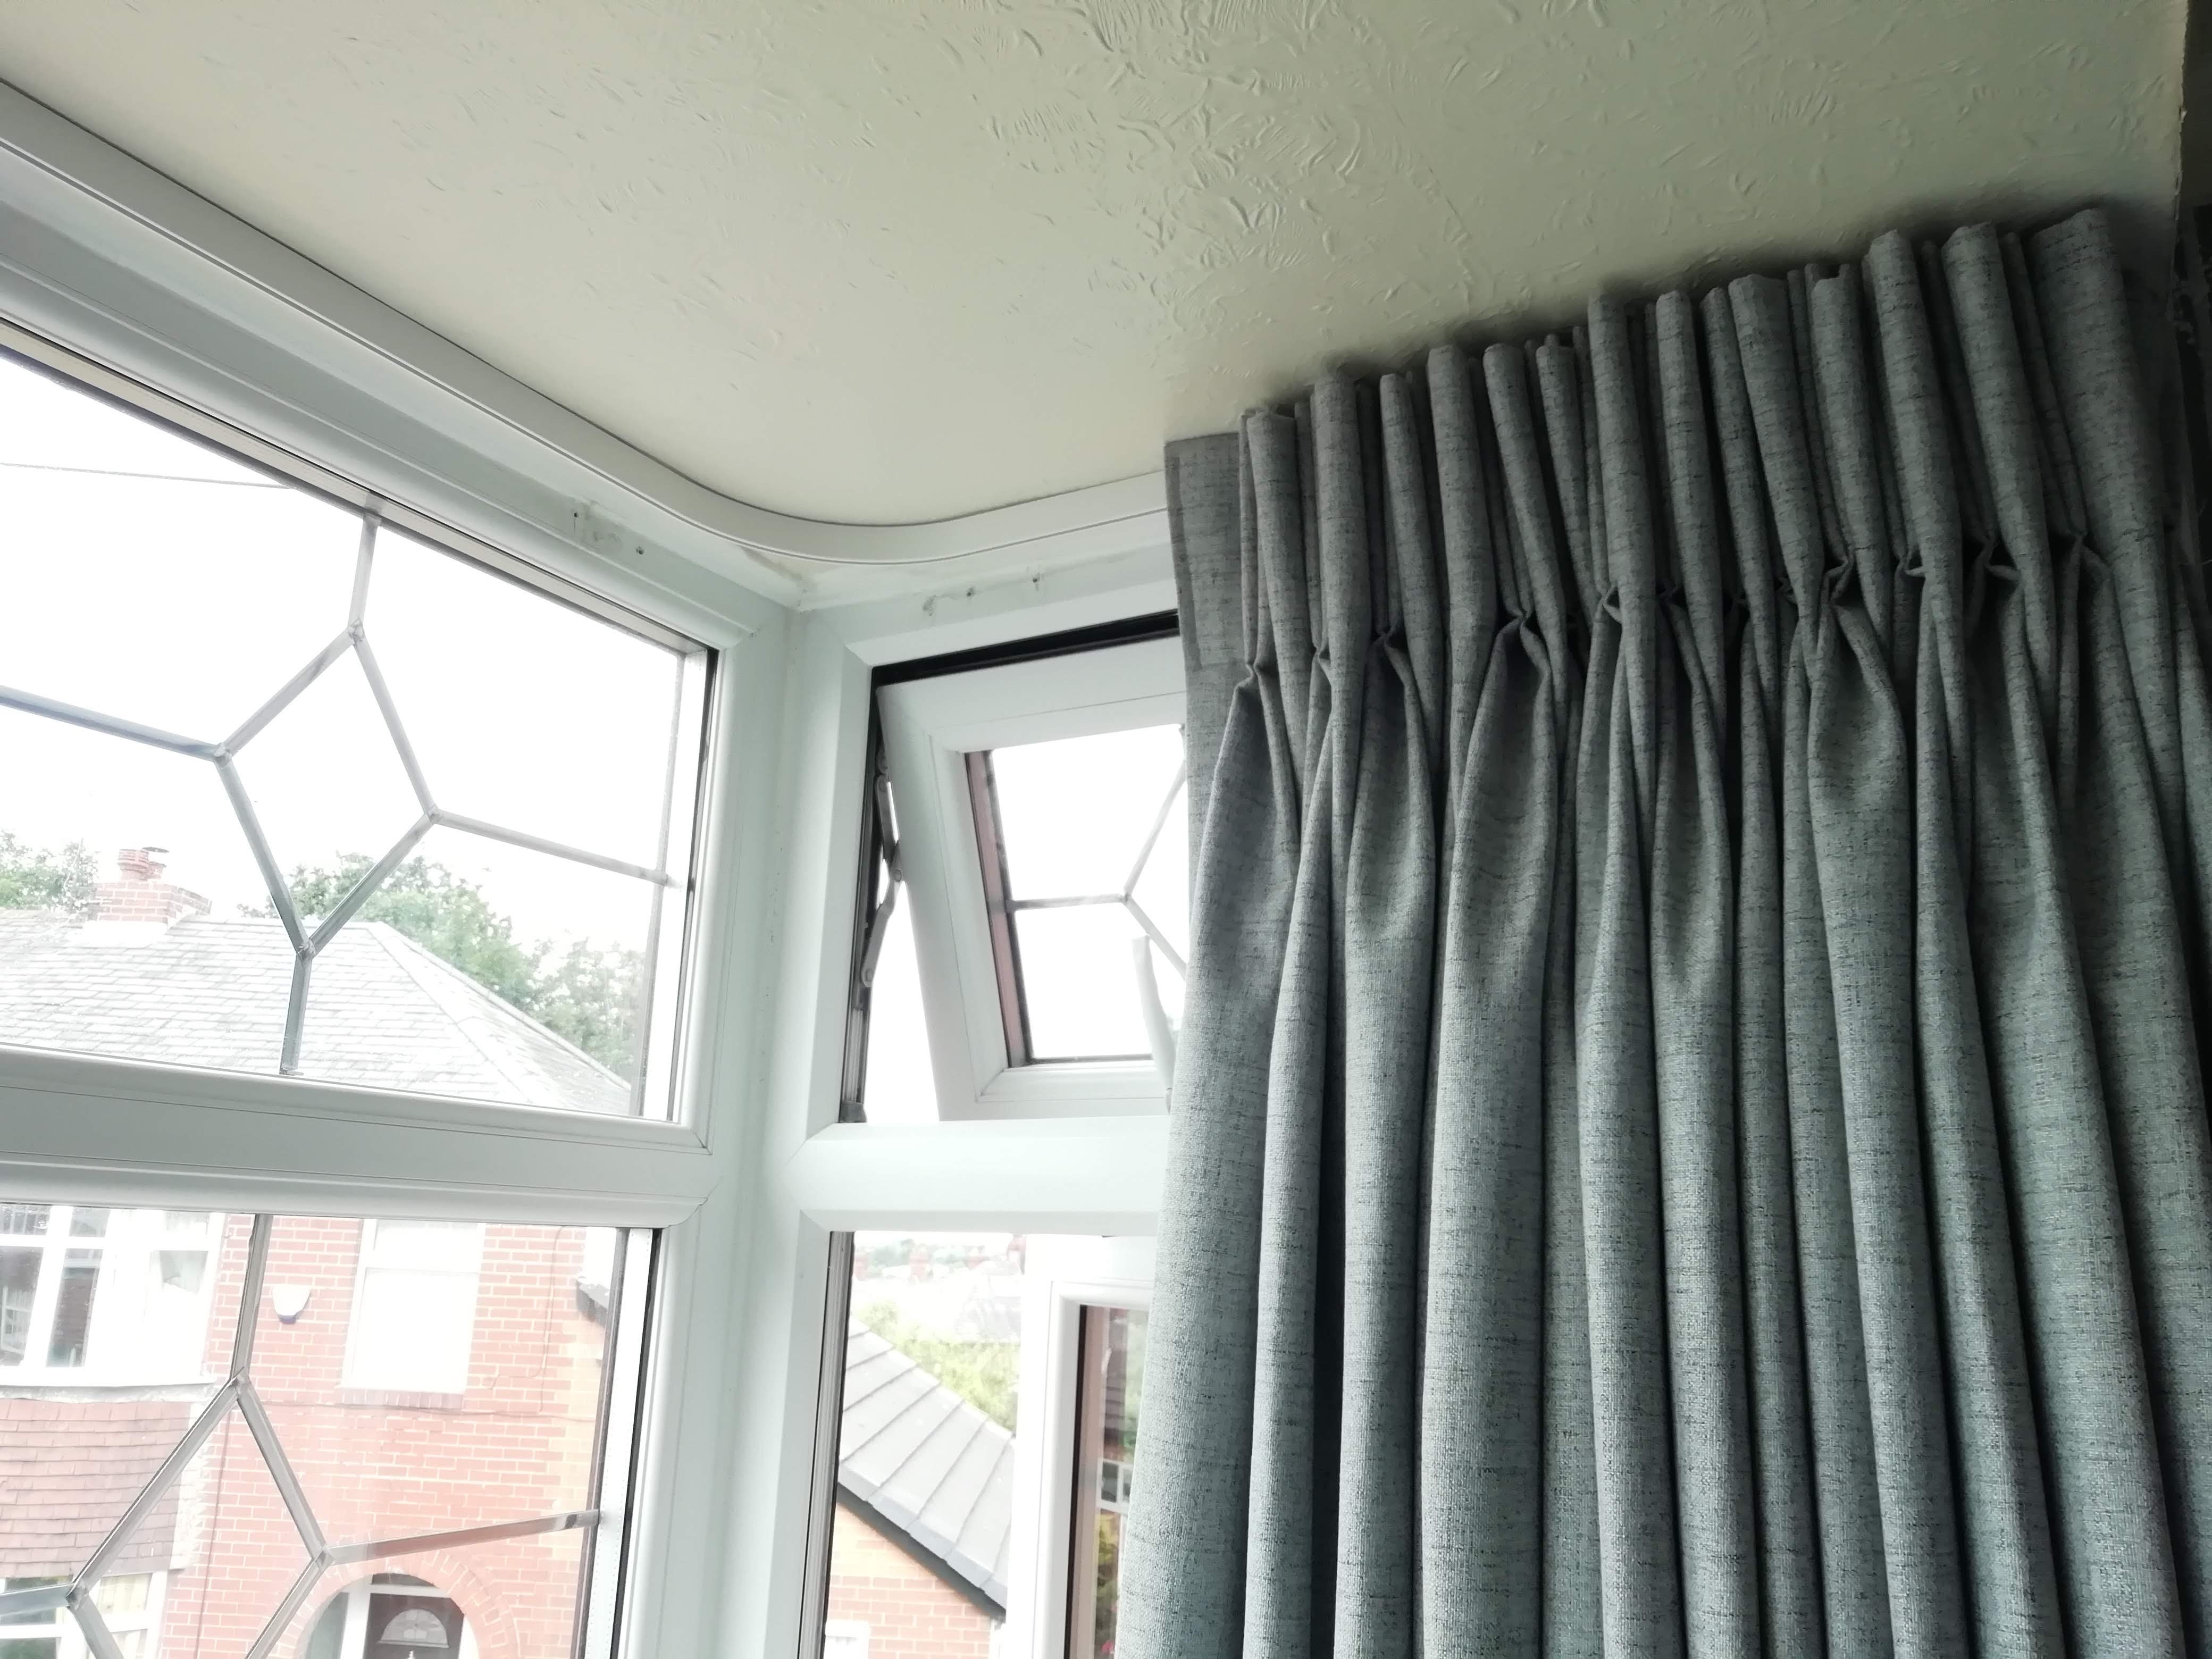 bay window curtains